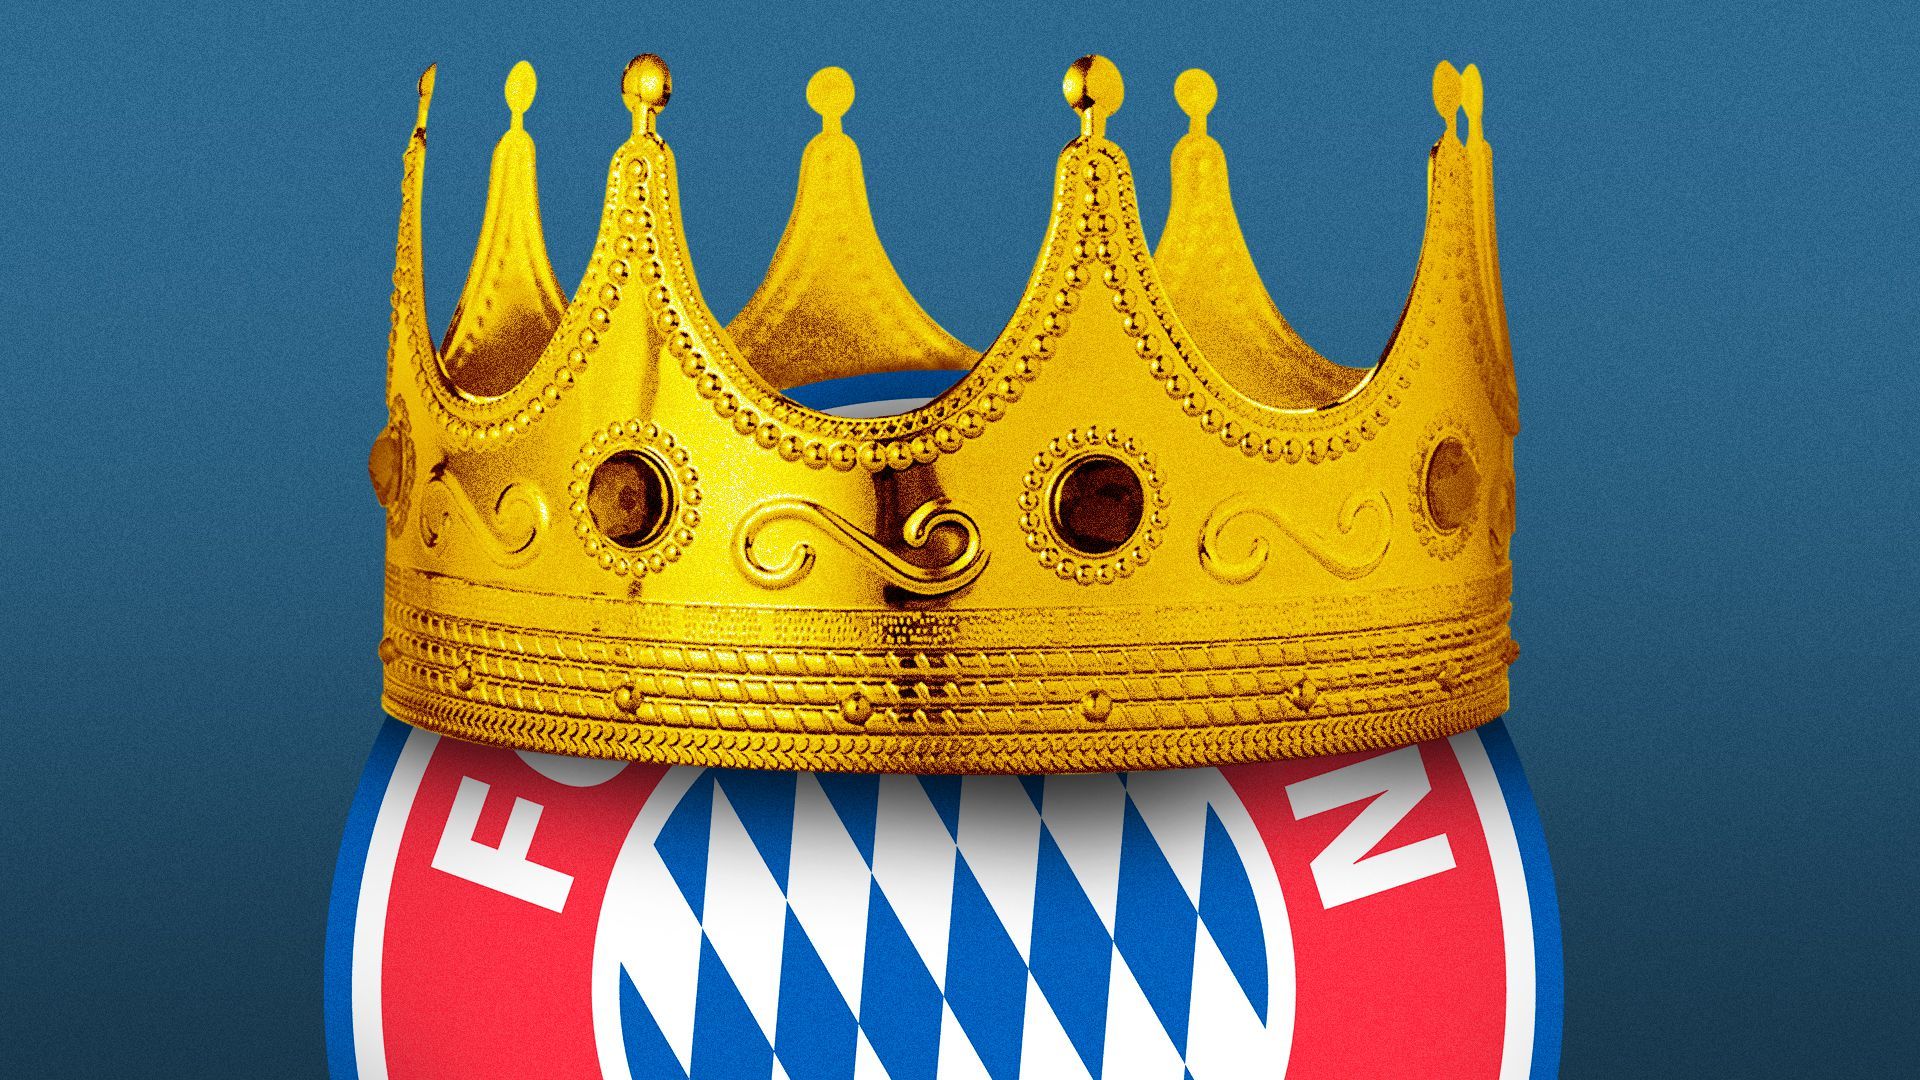  Illustration of FC Bayern Munich's logo wearing a crown